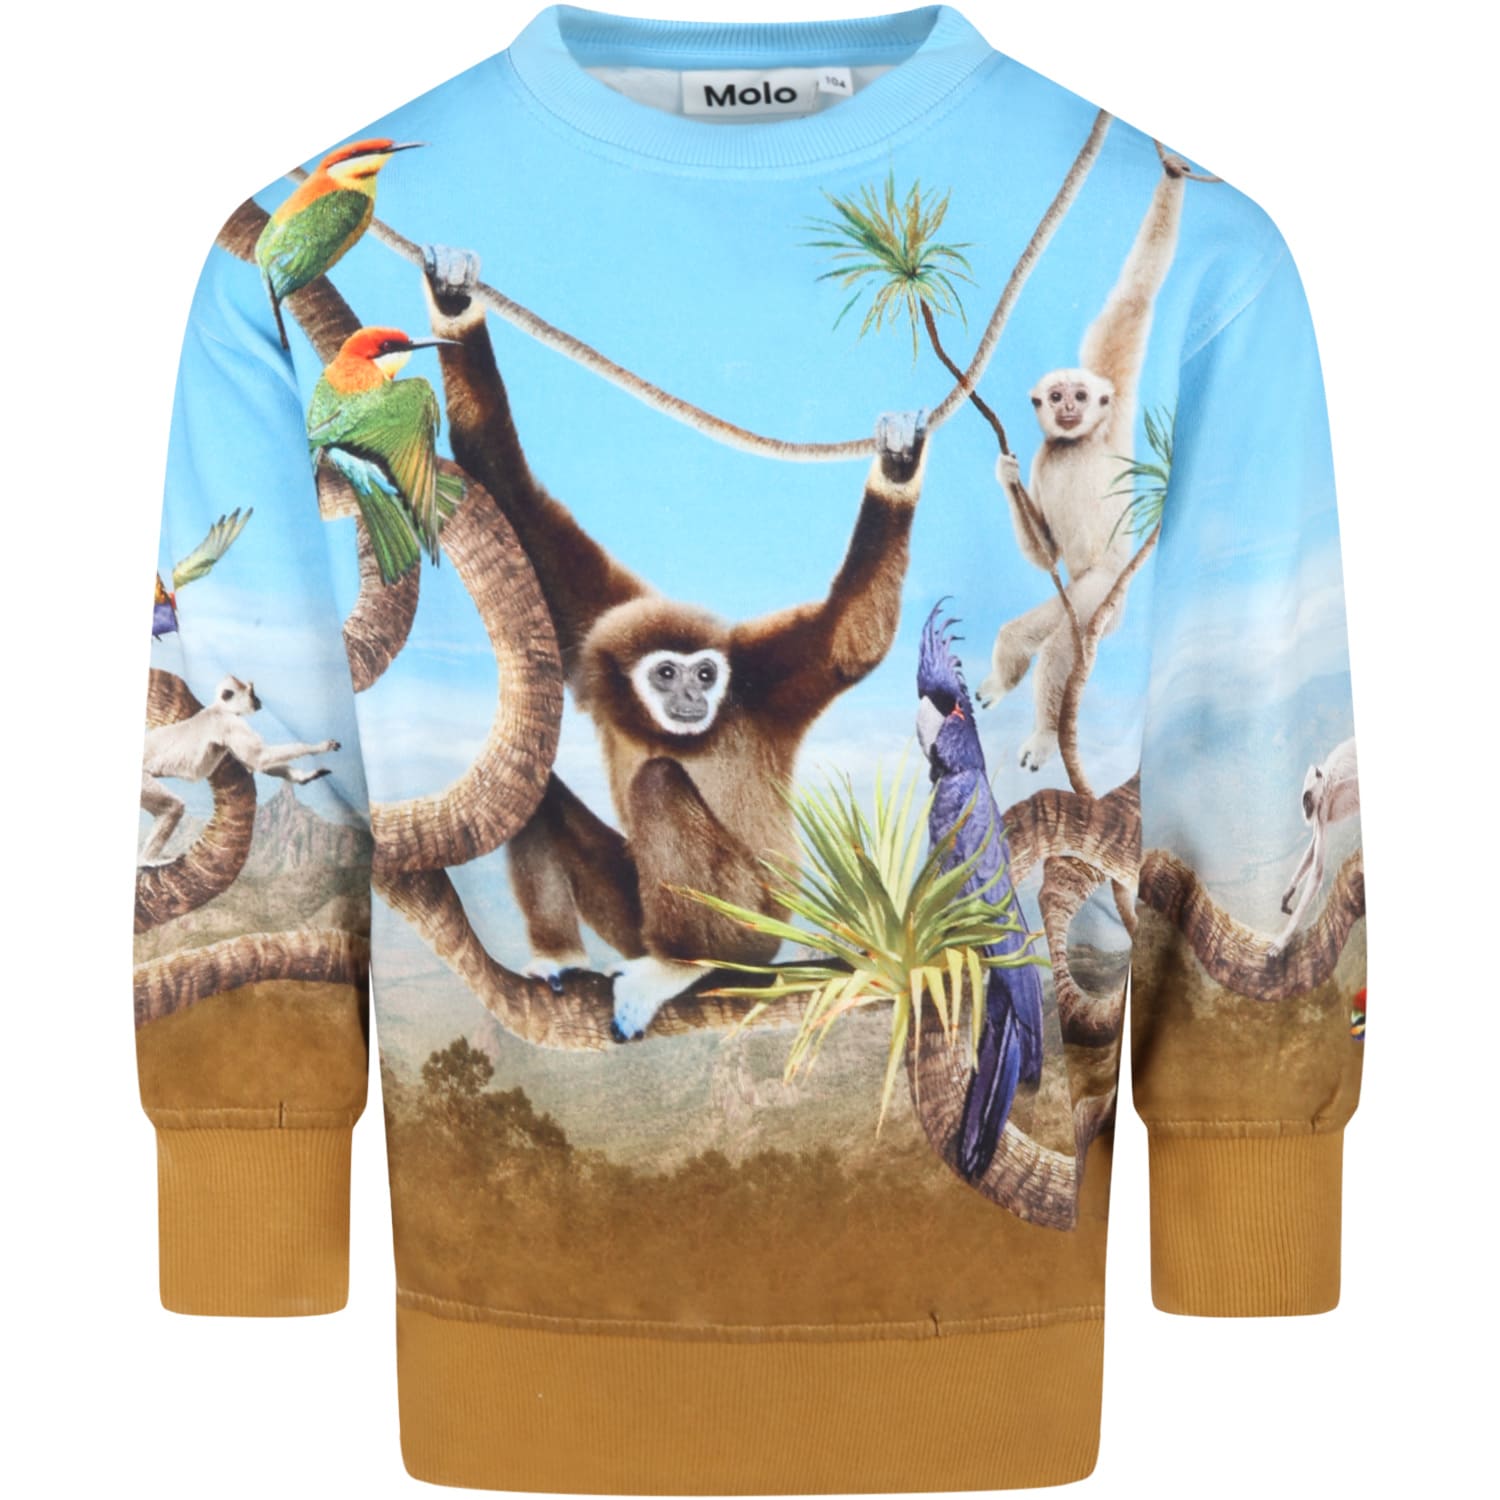 Molo Multicolor Sweatshirt For Kids With Animals